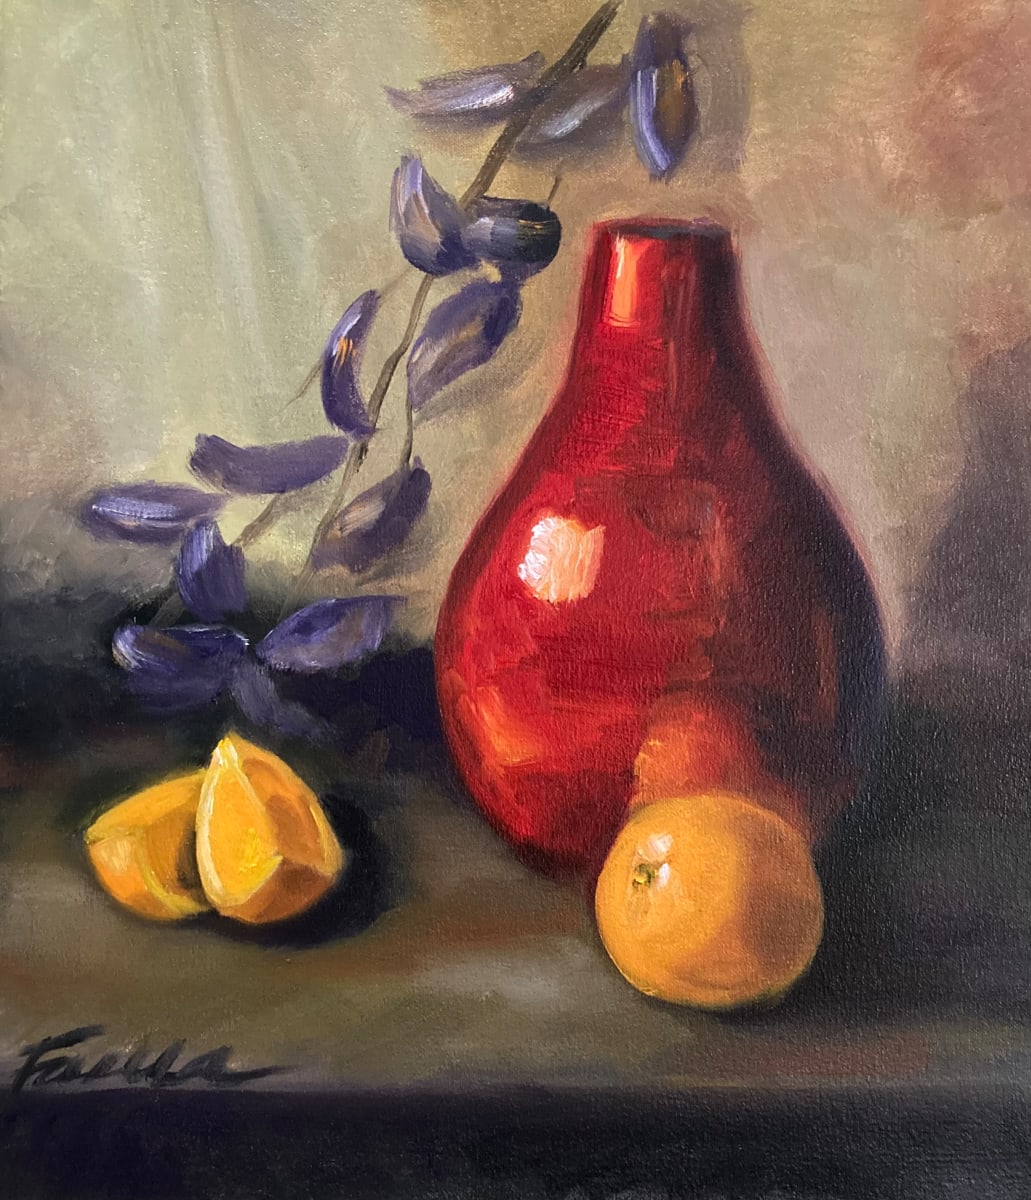 Home Decor and Oranges by Fran Failla 